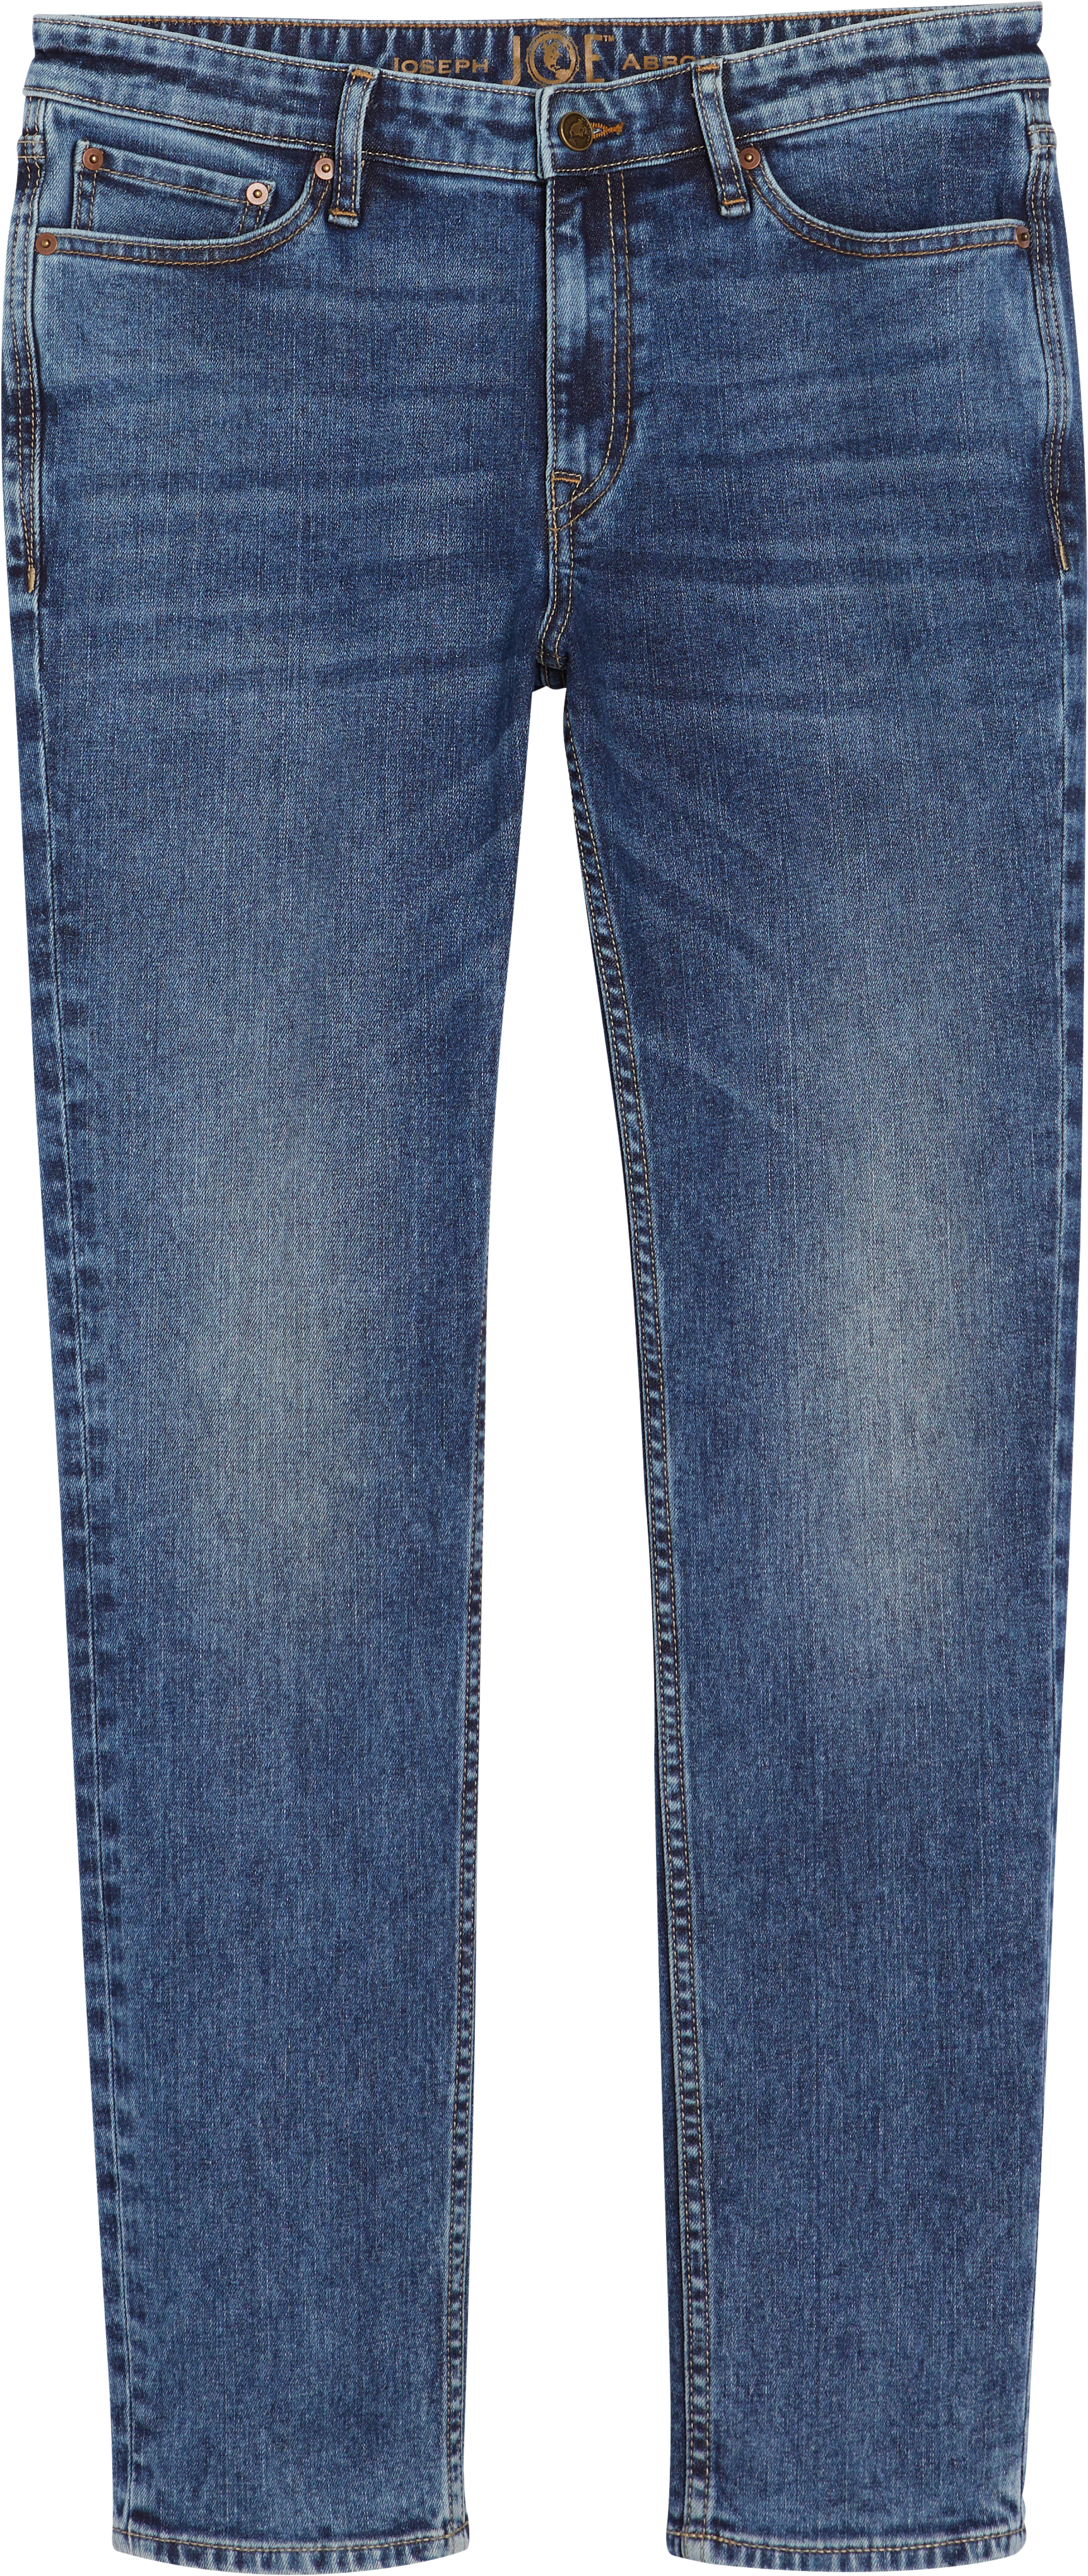 JOE Joseph Abboud Gavin Medium Blue Skinny Fit Jeans - Men's Pants ...